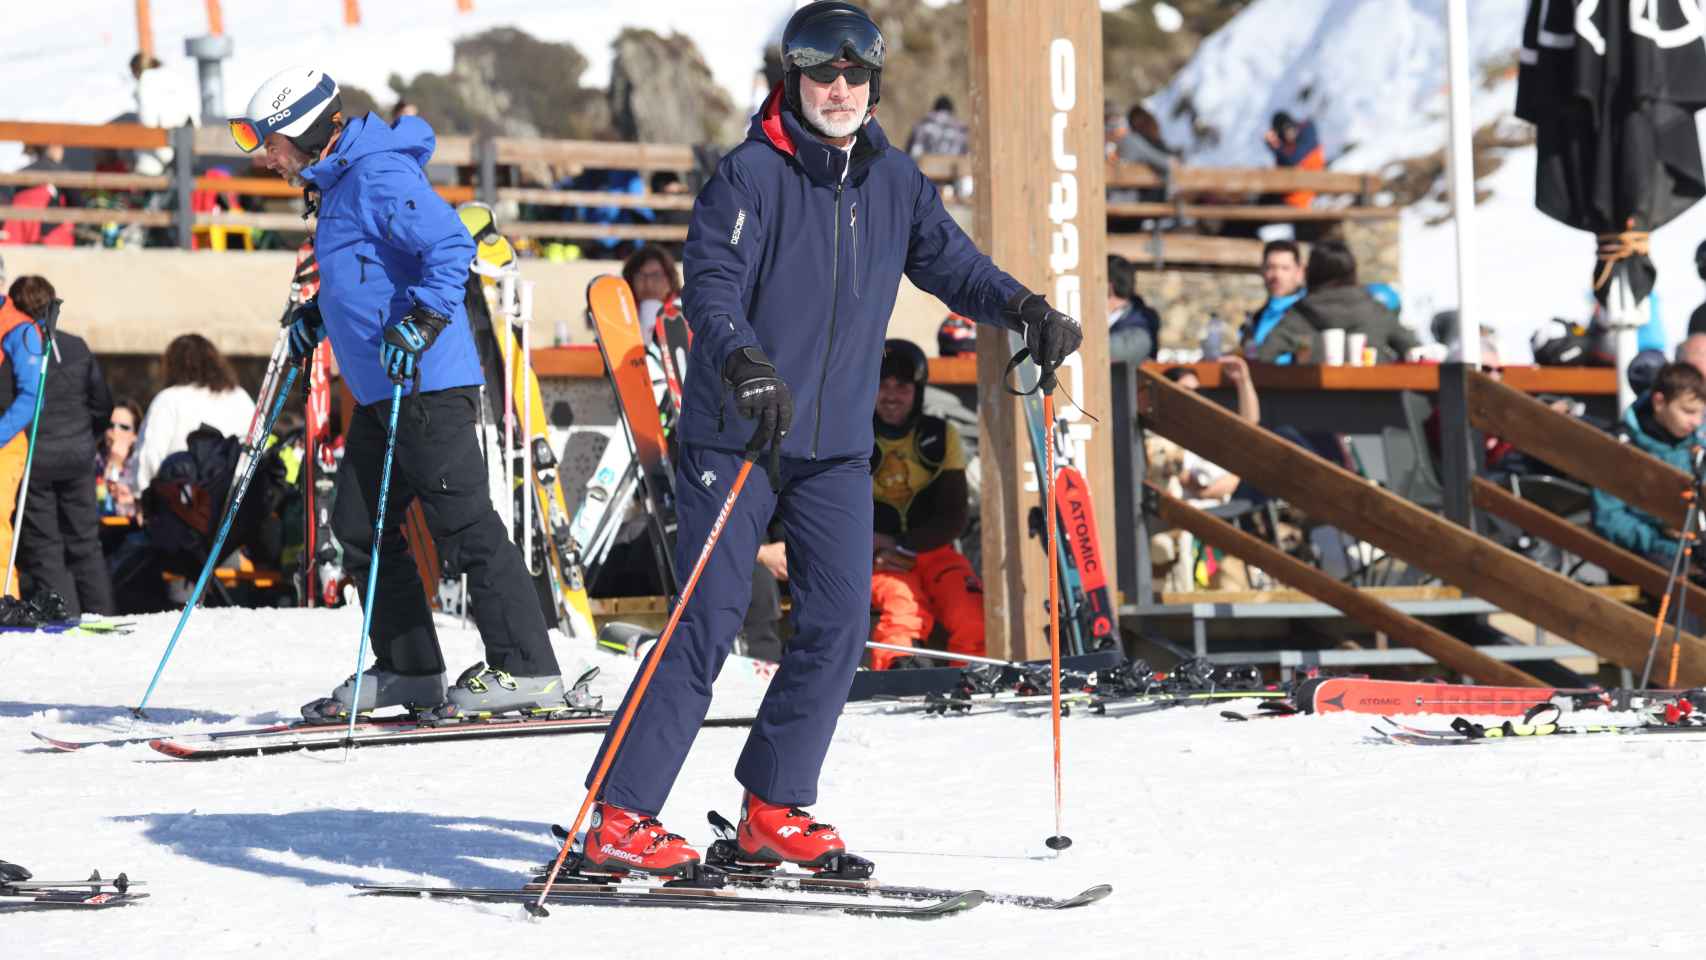 Felipe VI, totalmente equipado, a punto de salir a esquiar, posa ante los medios de comunicación.